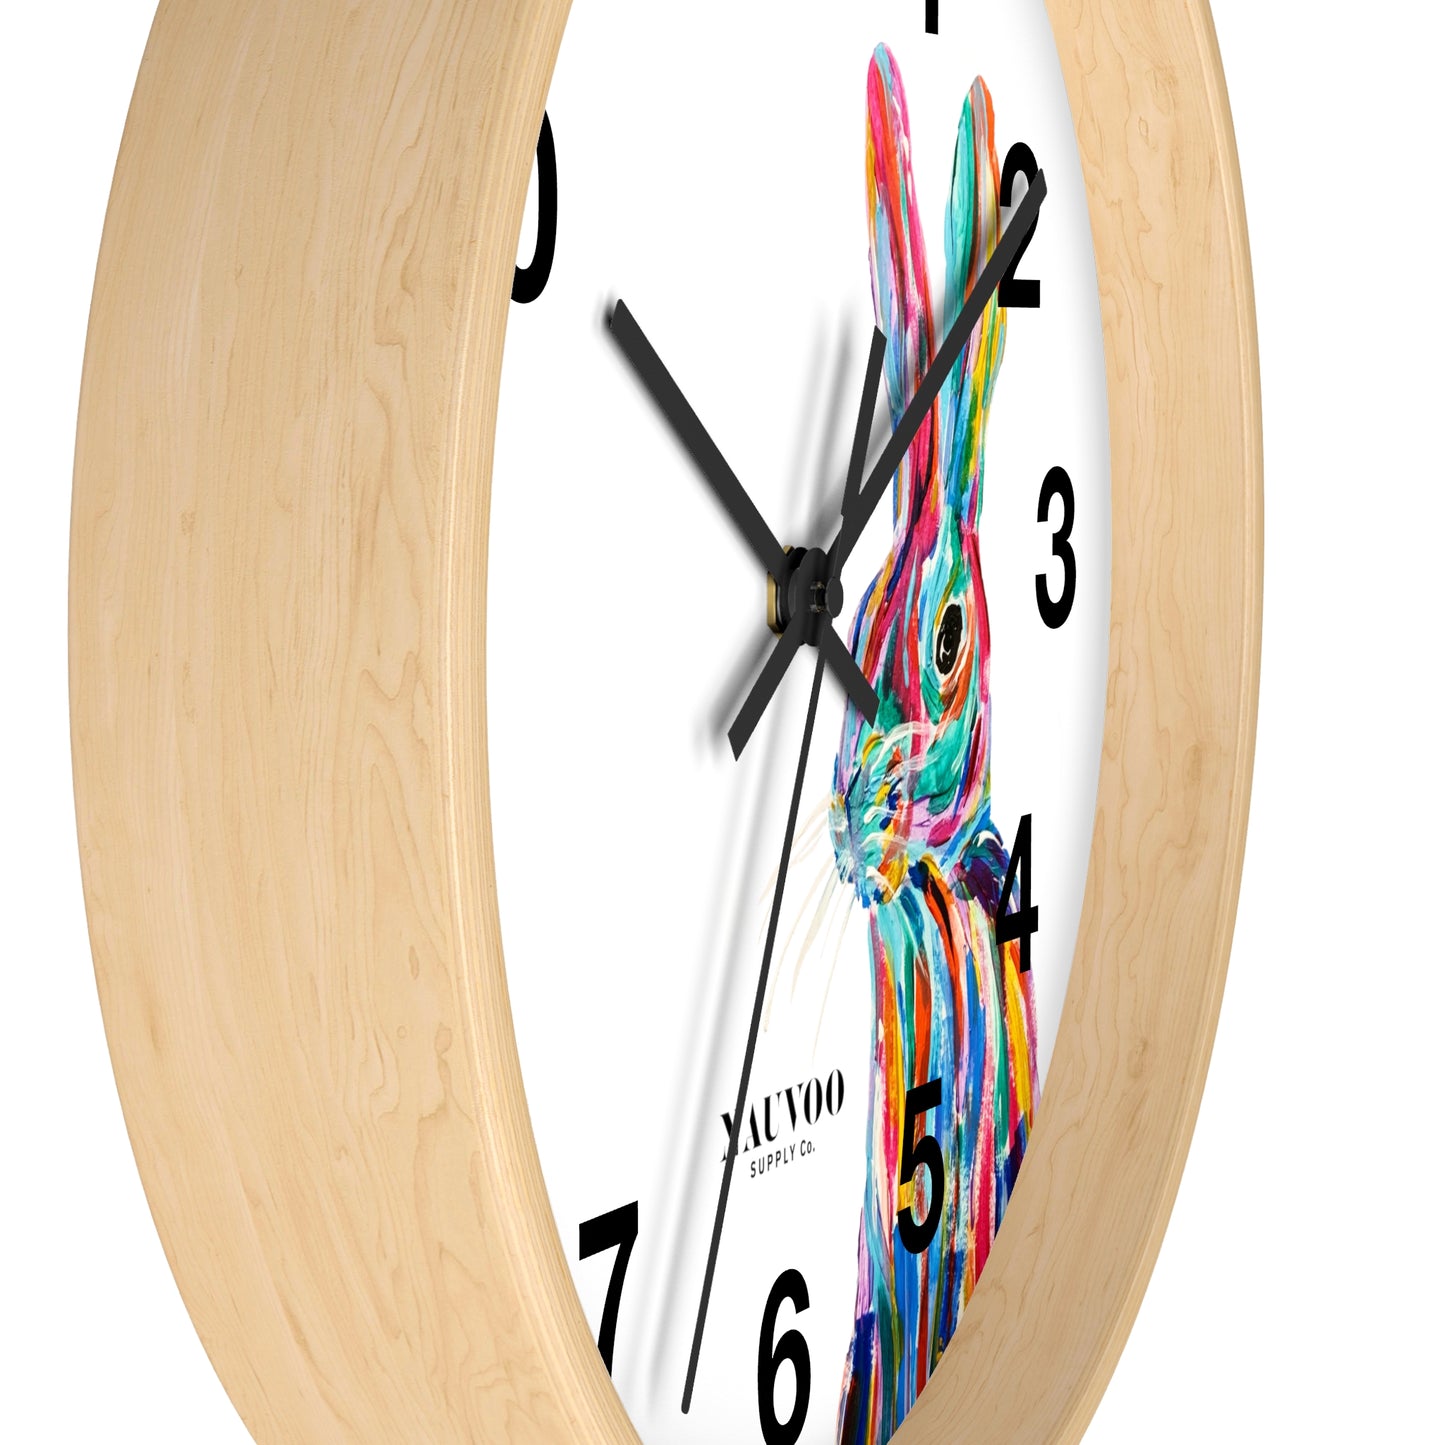 Modern Clock – Pop Color Painted Rabbit Wall clock